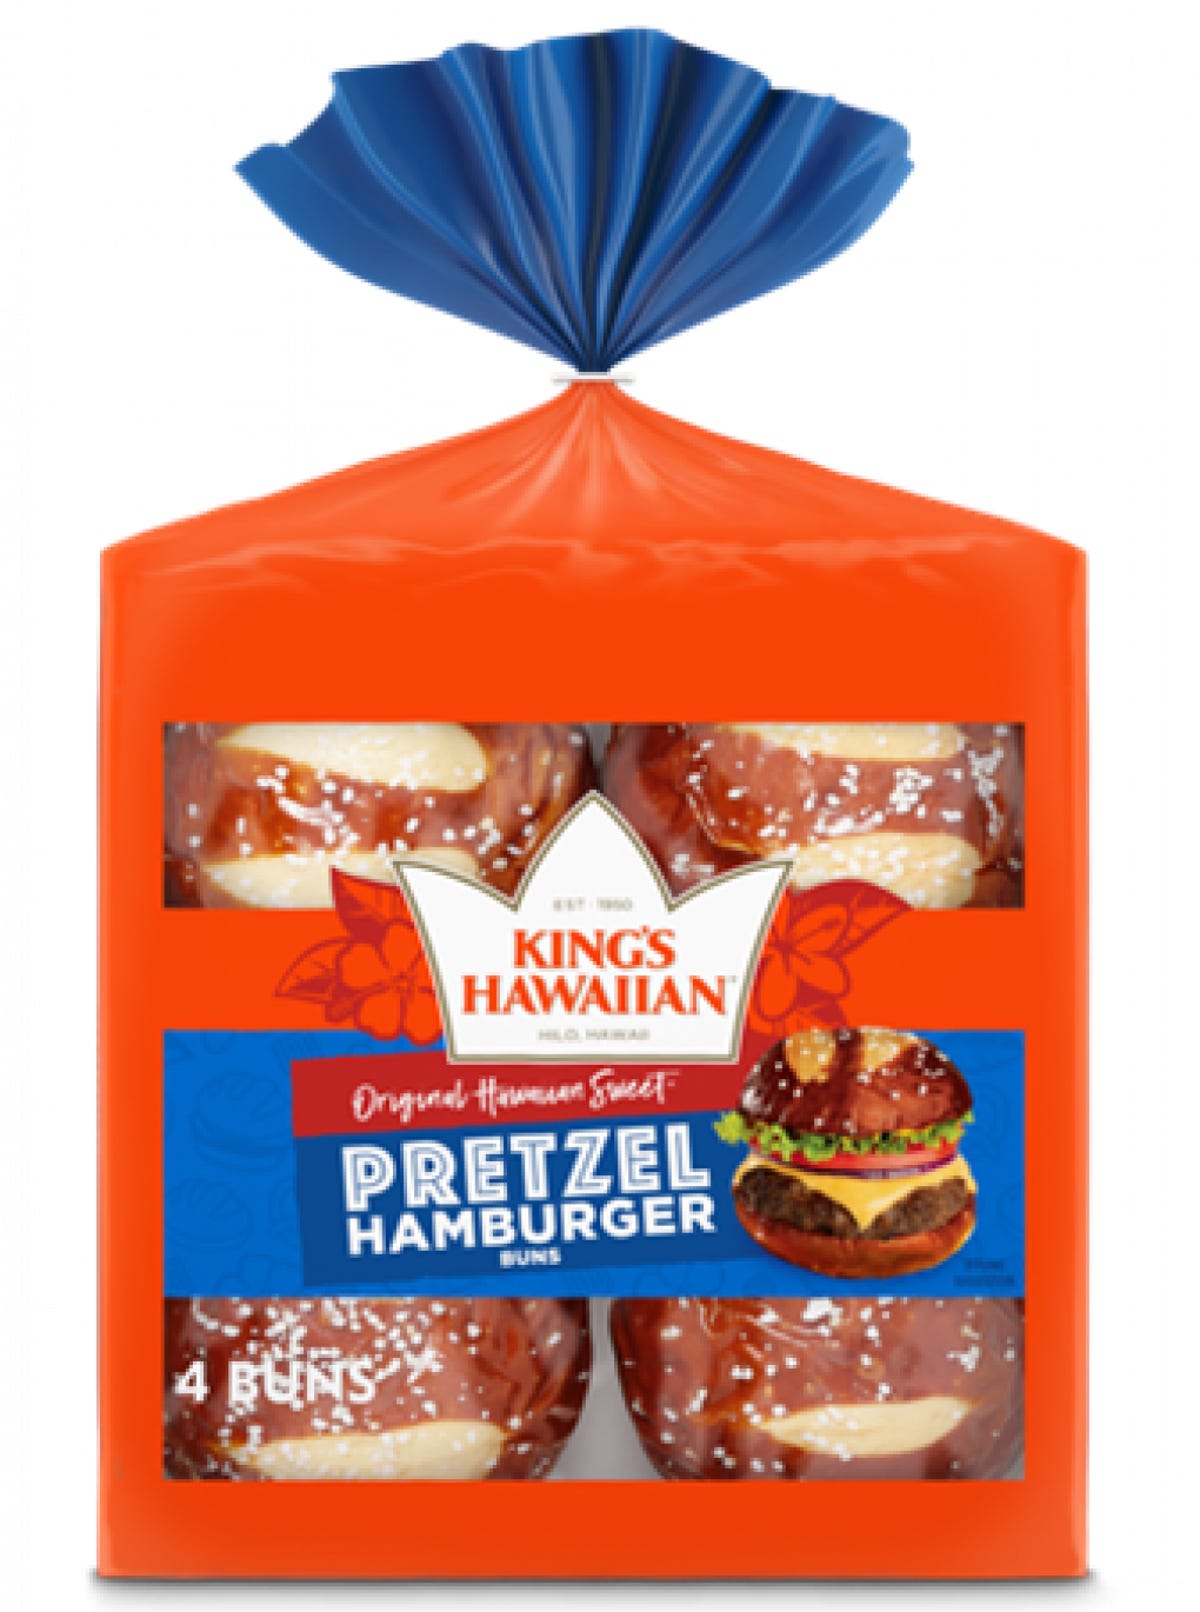 A package of recalled pretzel hamburger buns